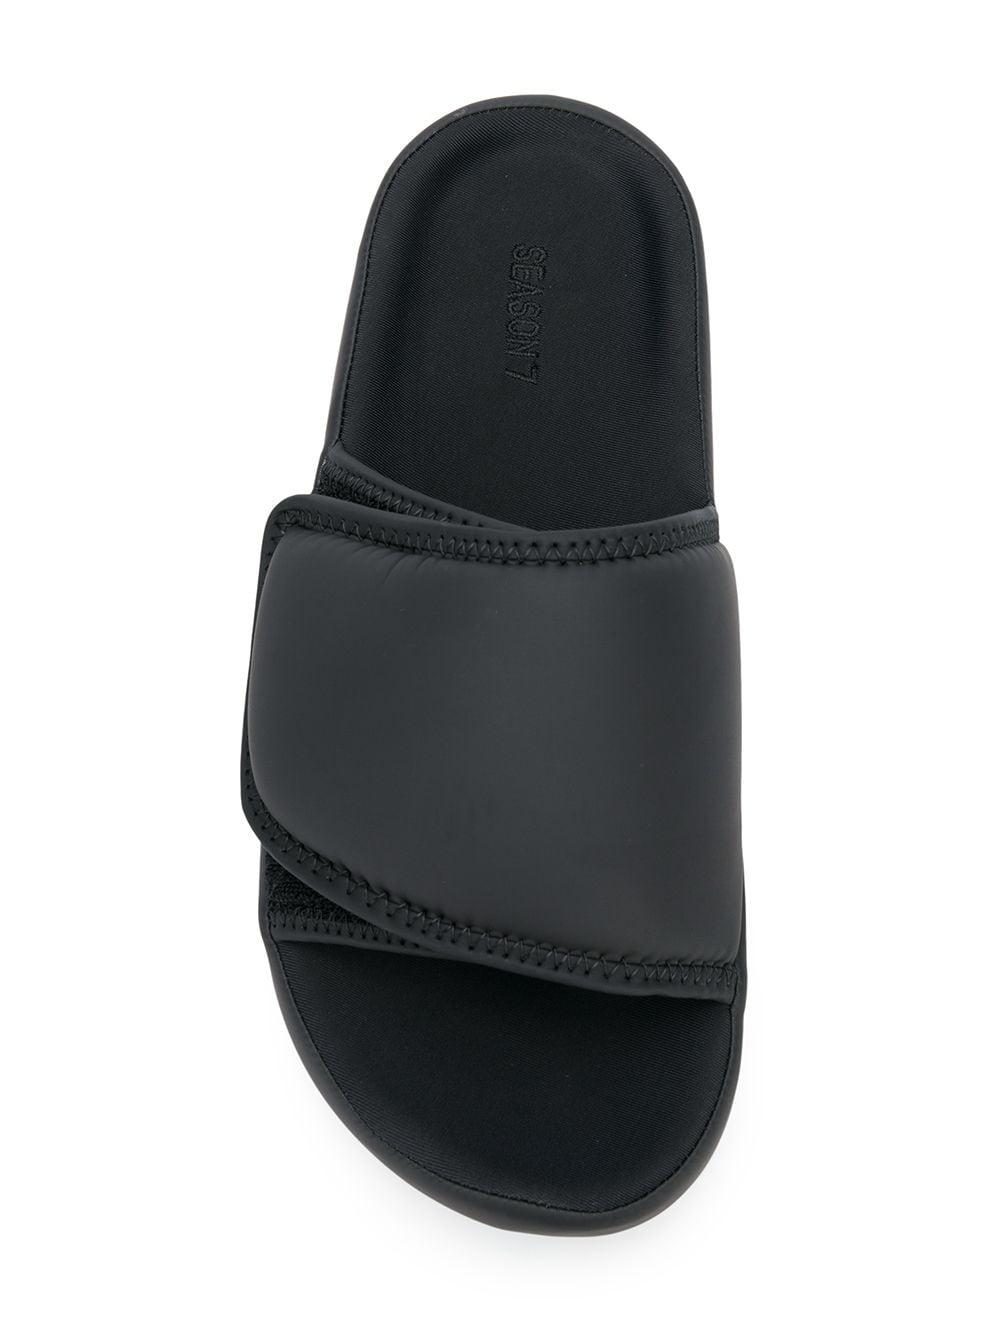 Yeezy Neoprene Bulky Sandals in Black 